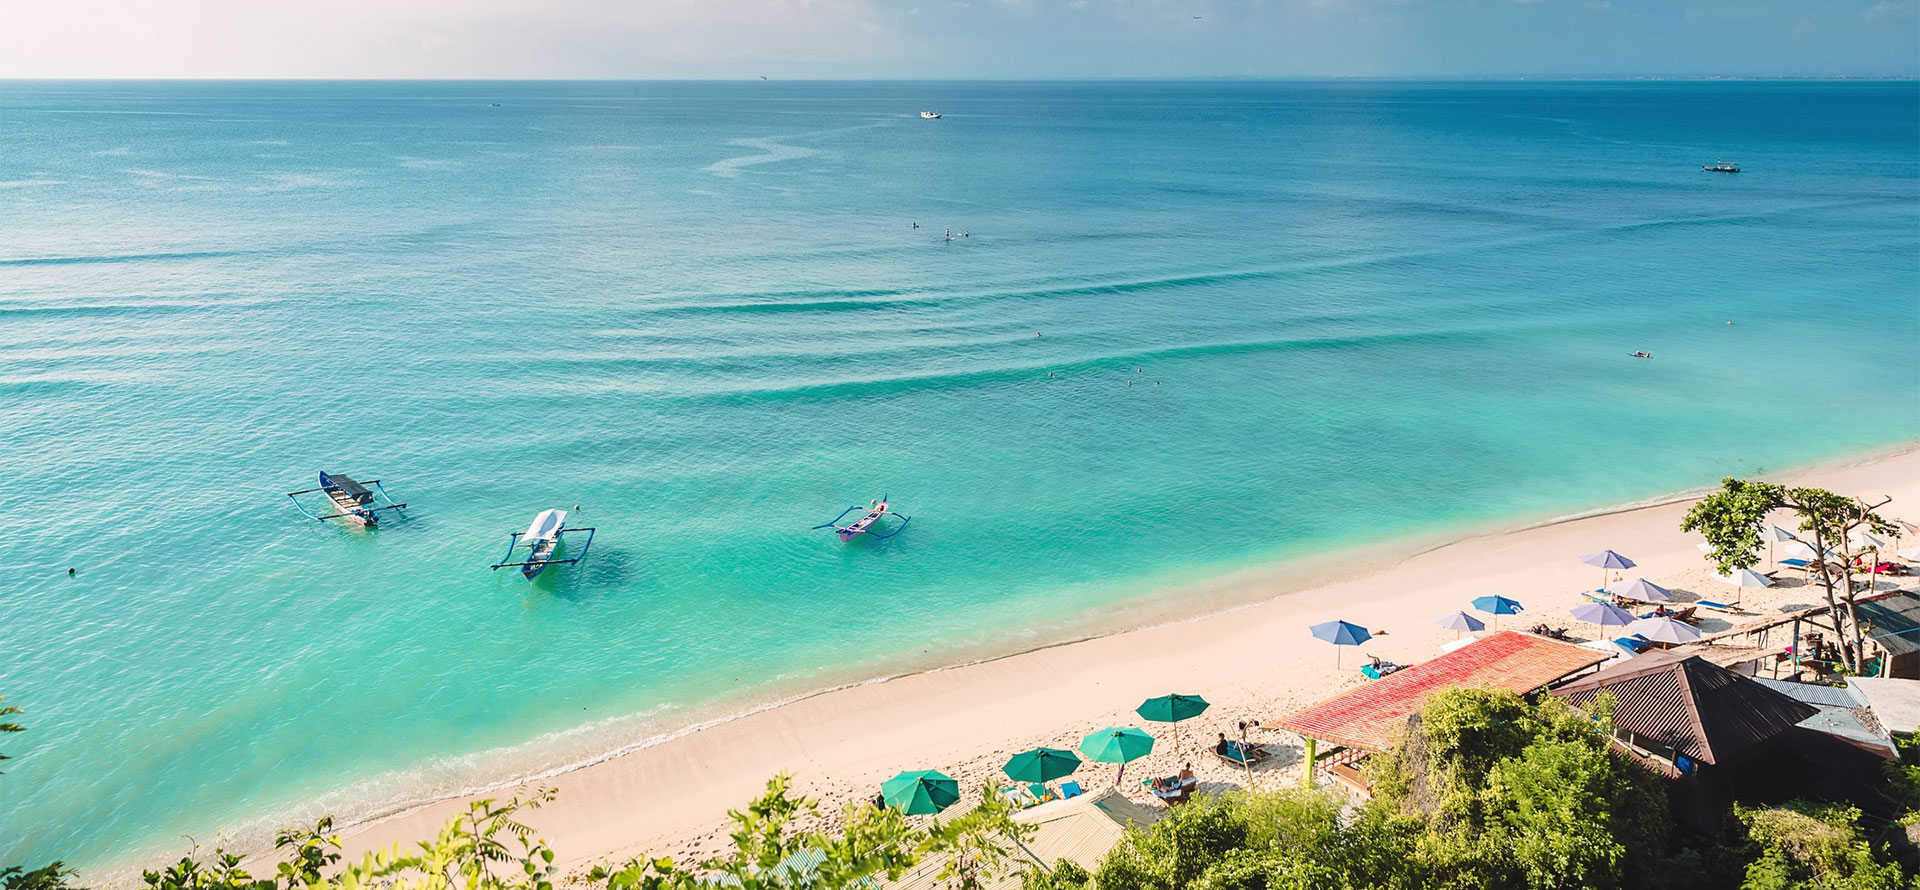 Bali honeymoon top view at beach.